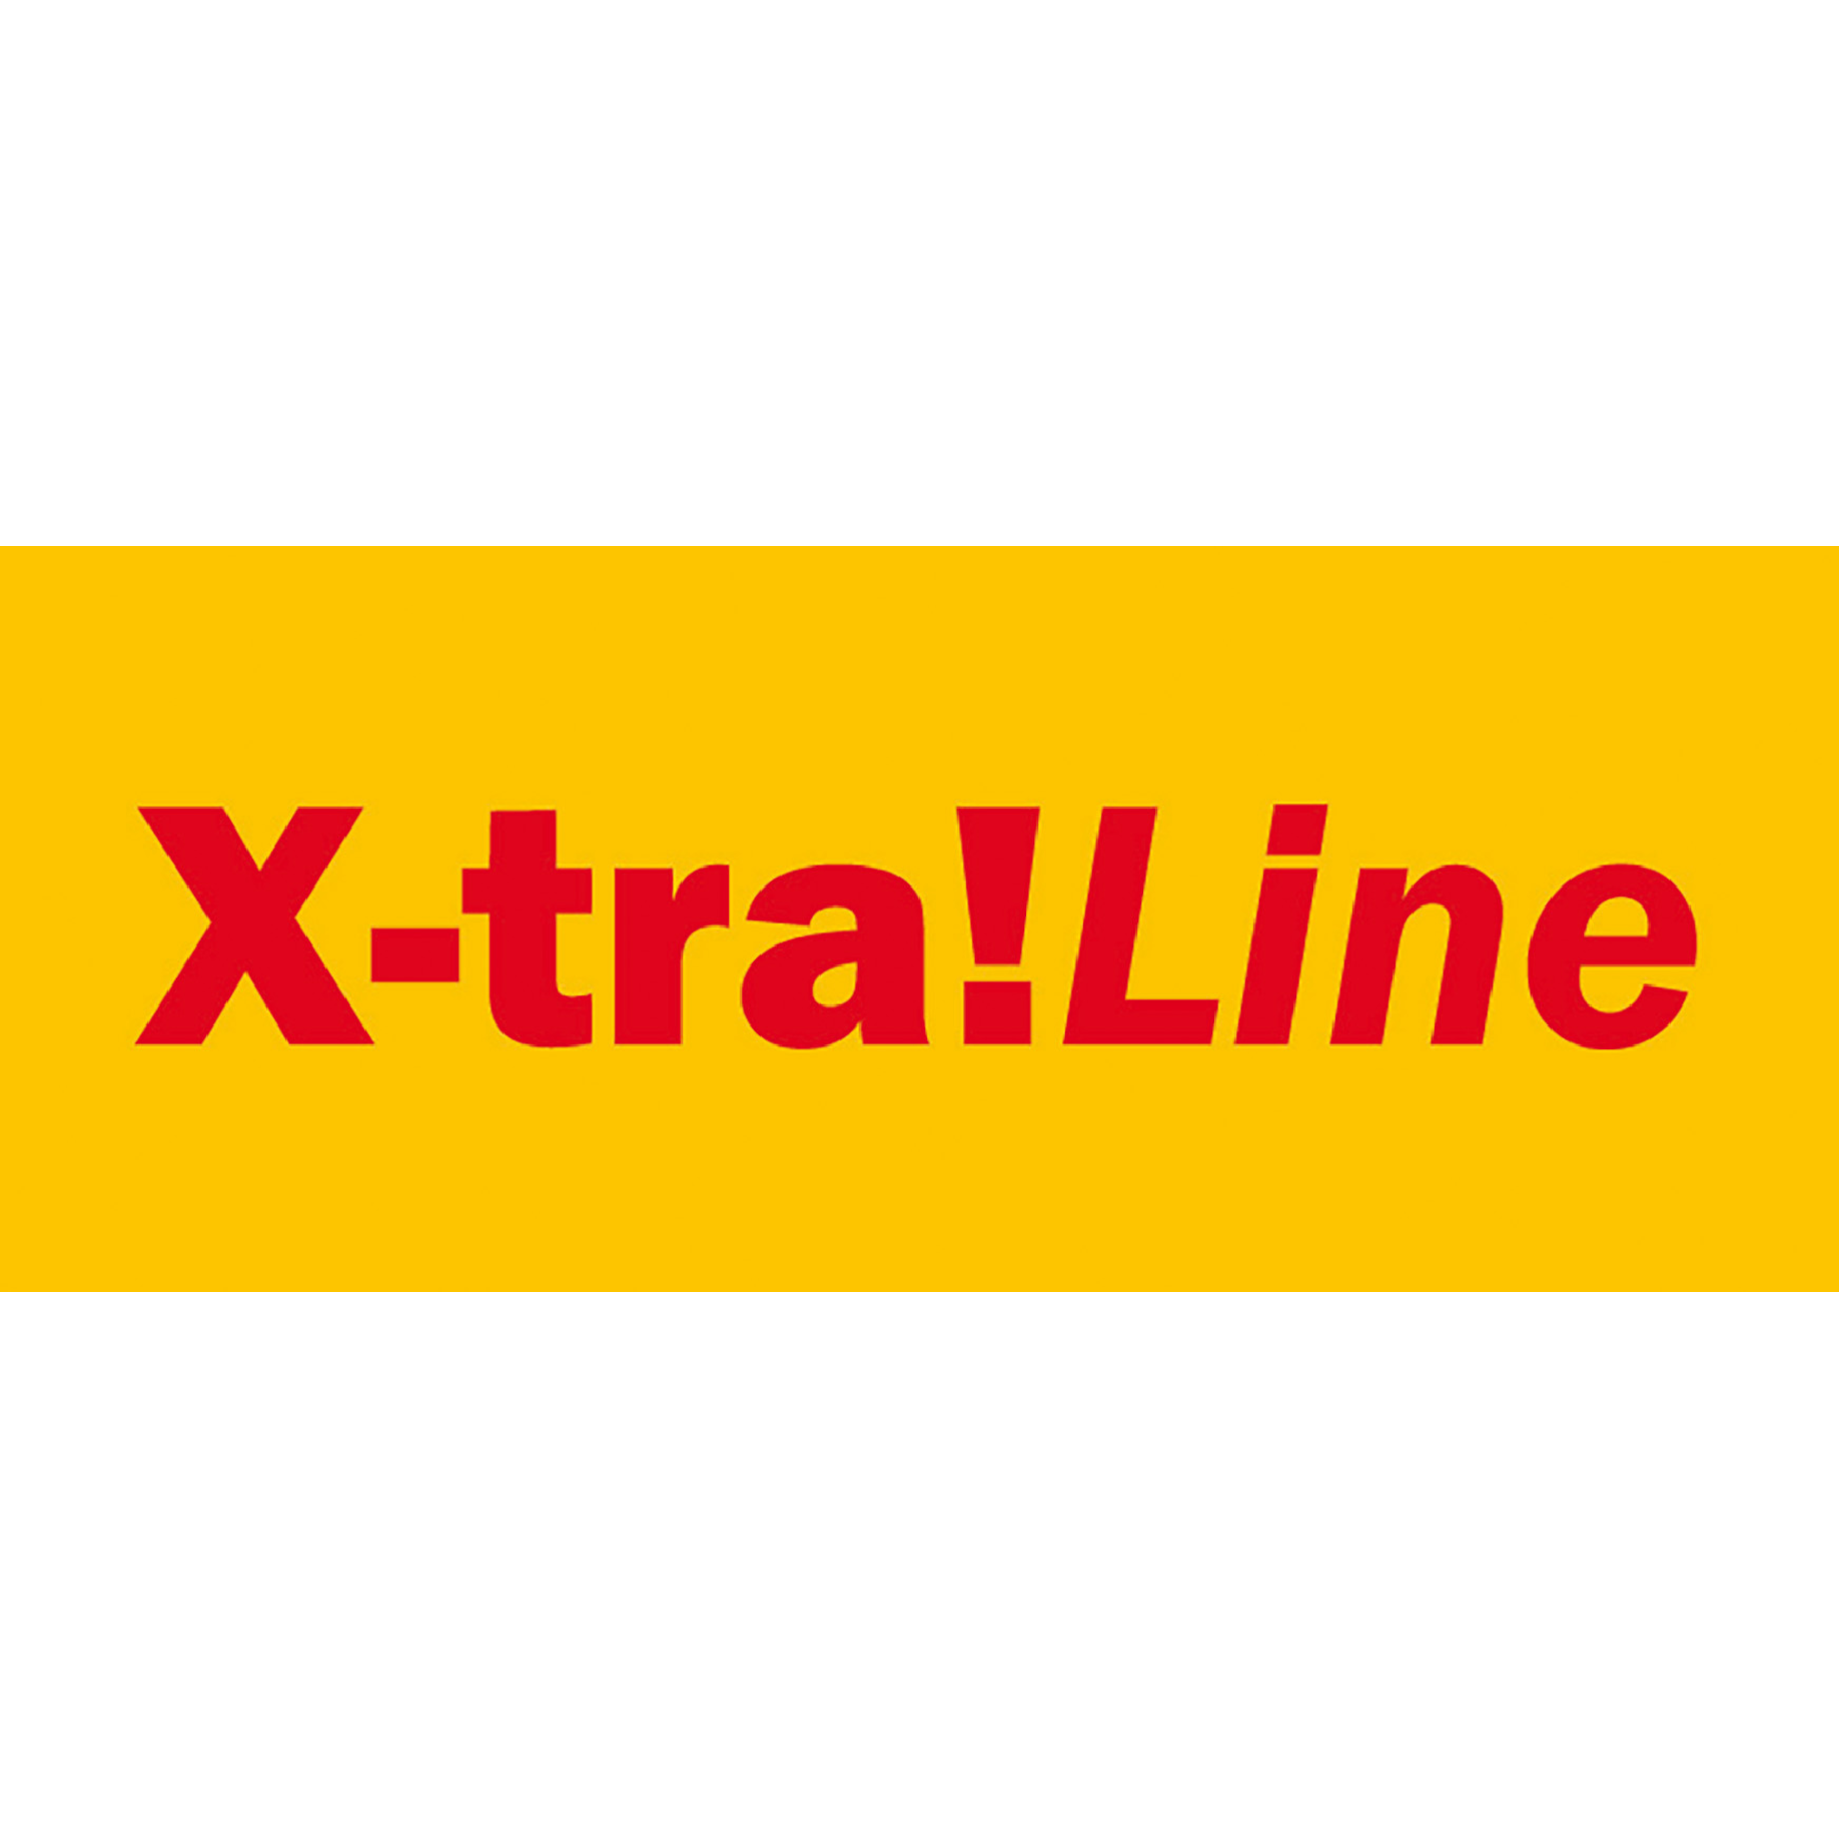 Stativleinwand X-tra!Line